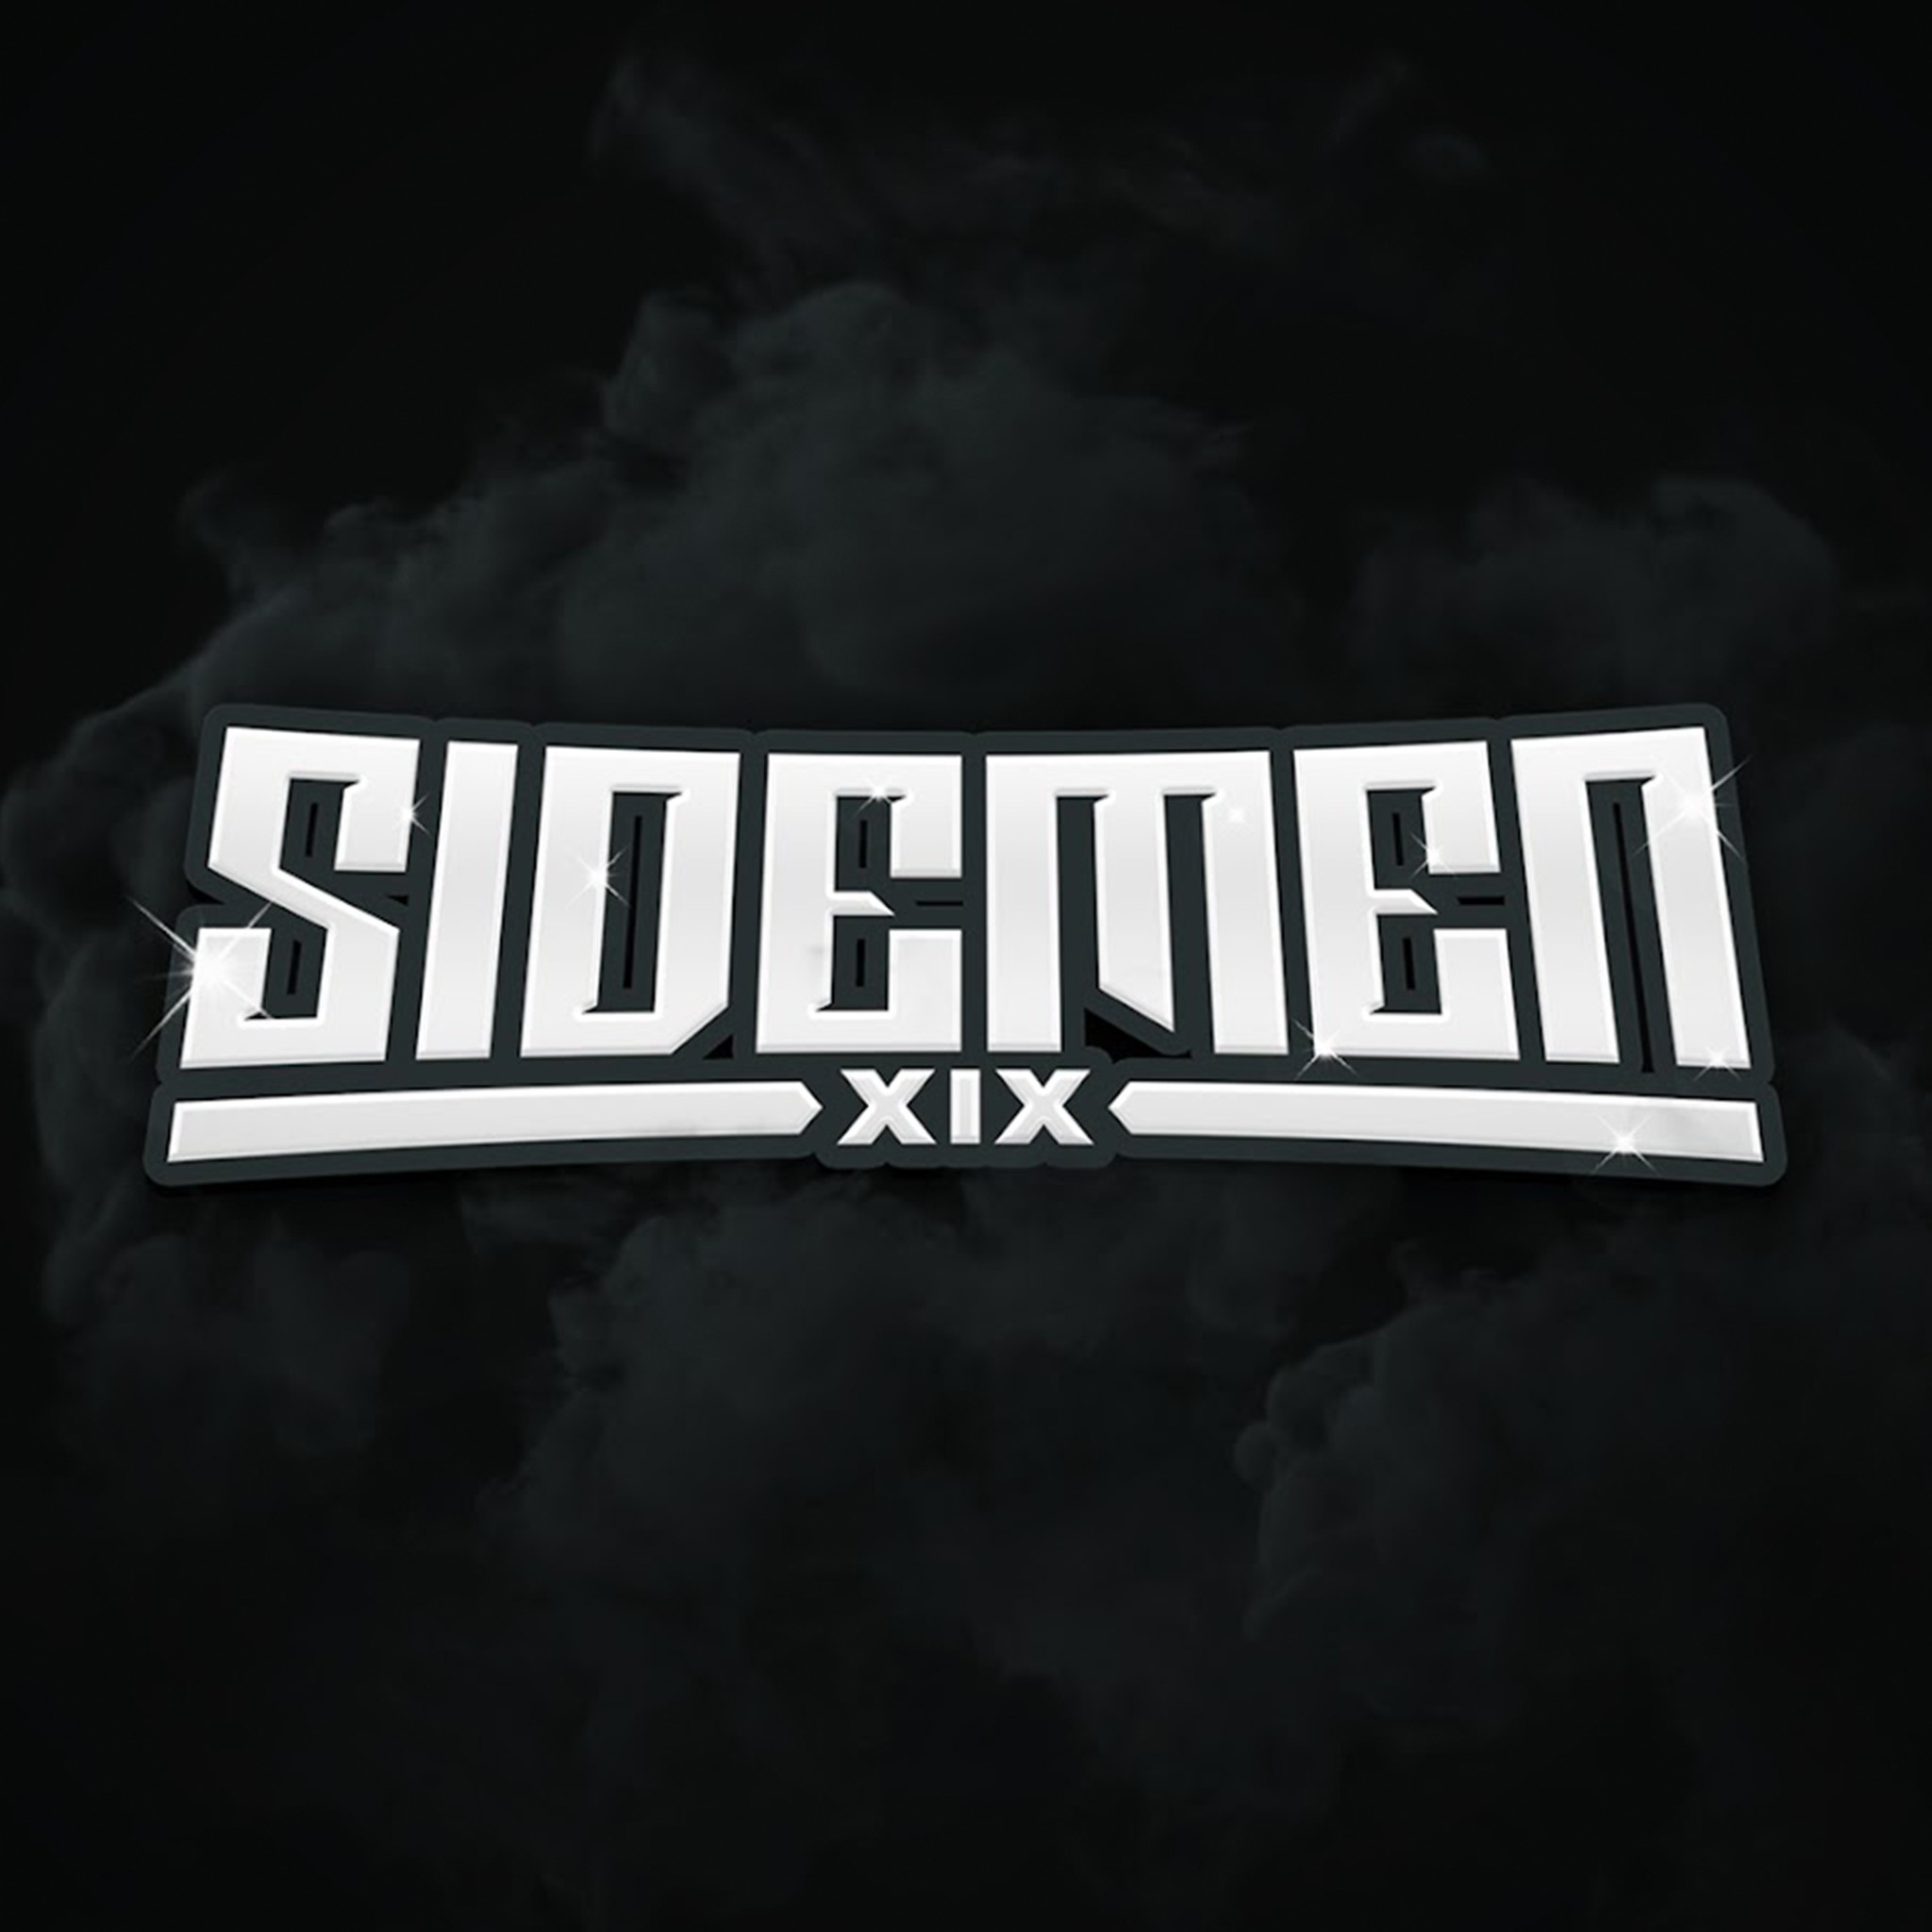 sidemen logo